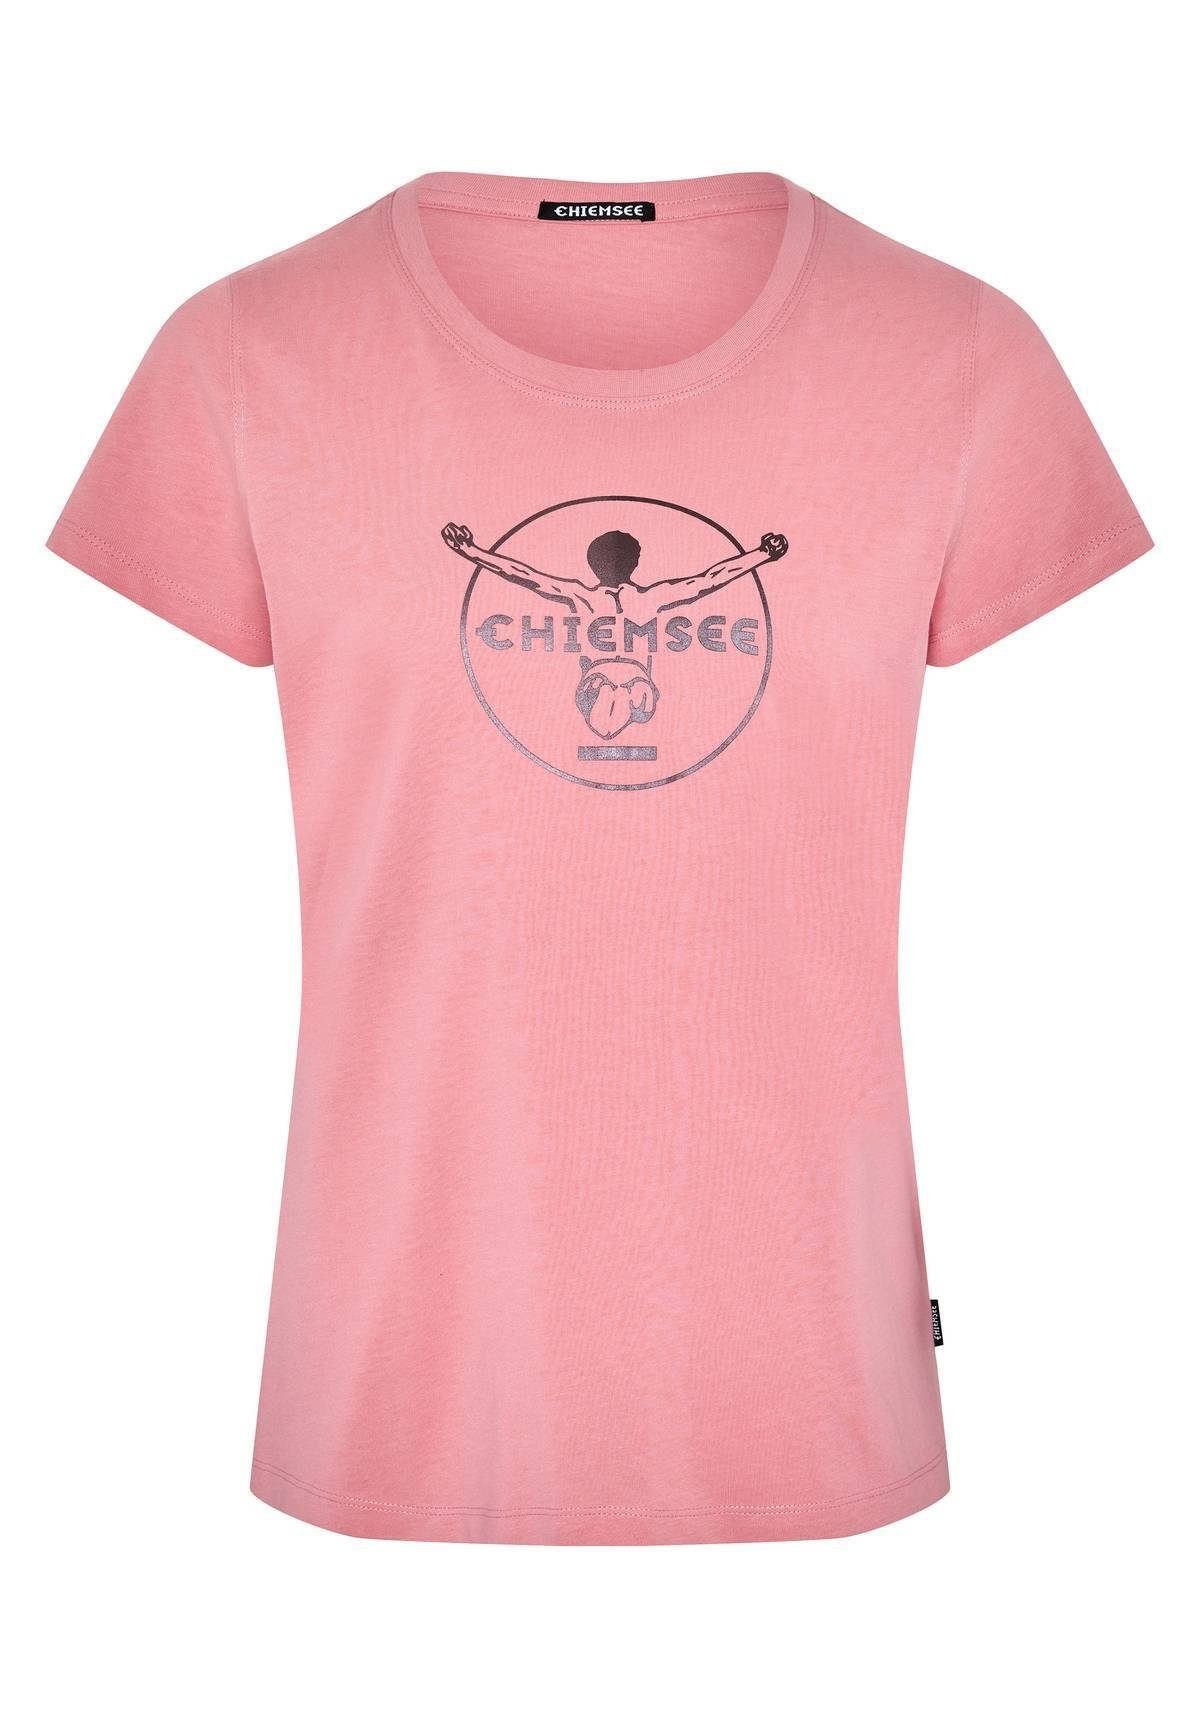 Chiemsee T-Shirt Damen T-Shirt - Taormina, Baumwolle Rosa Shirt